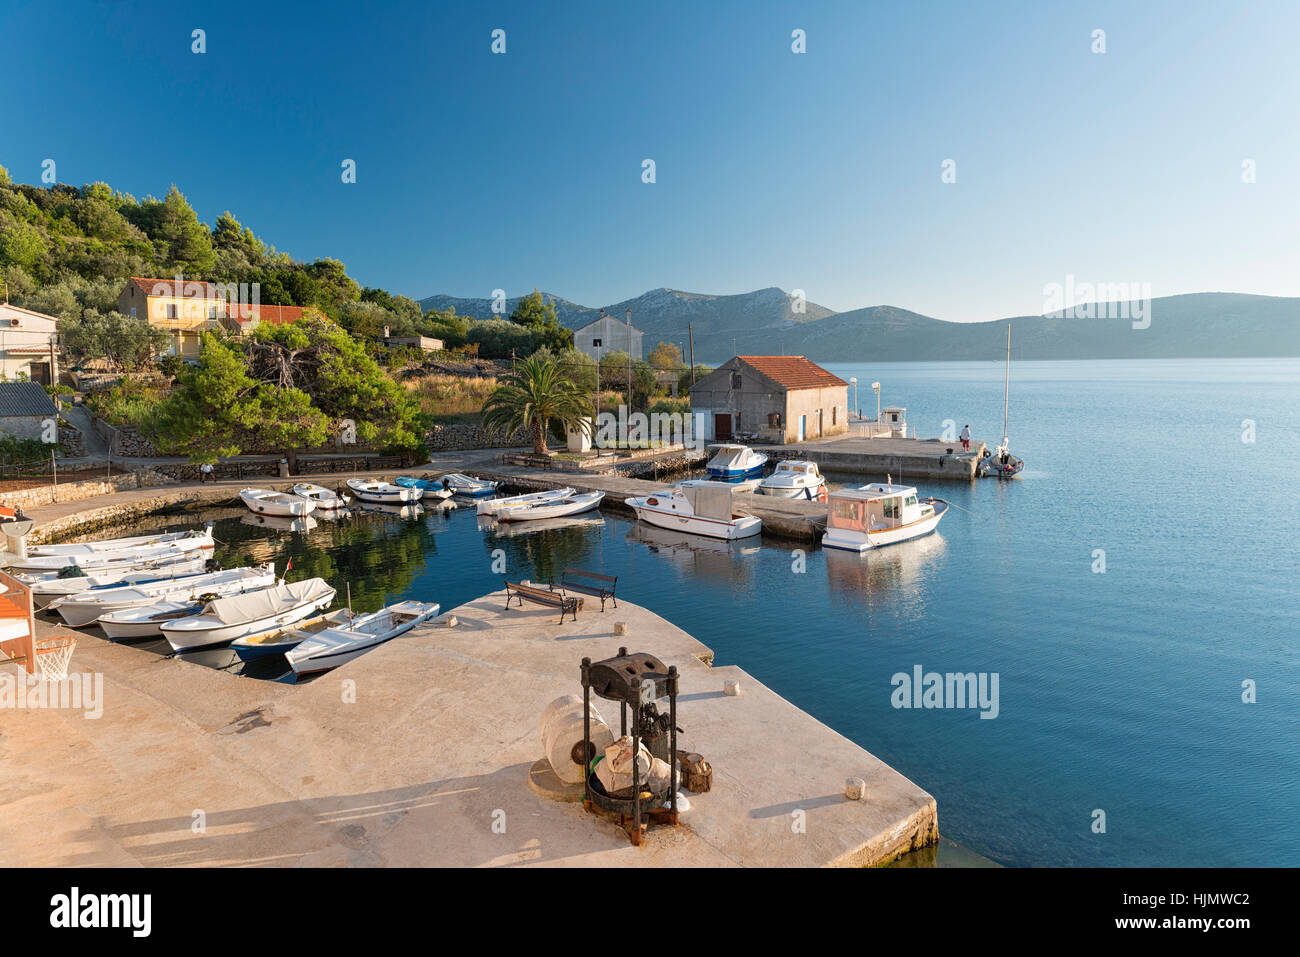 Croatia, Dalmatia, Harbour of Mala Rava with view of Dugi Otok Island Stock Photo